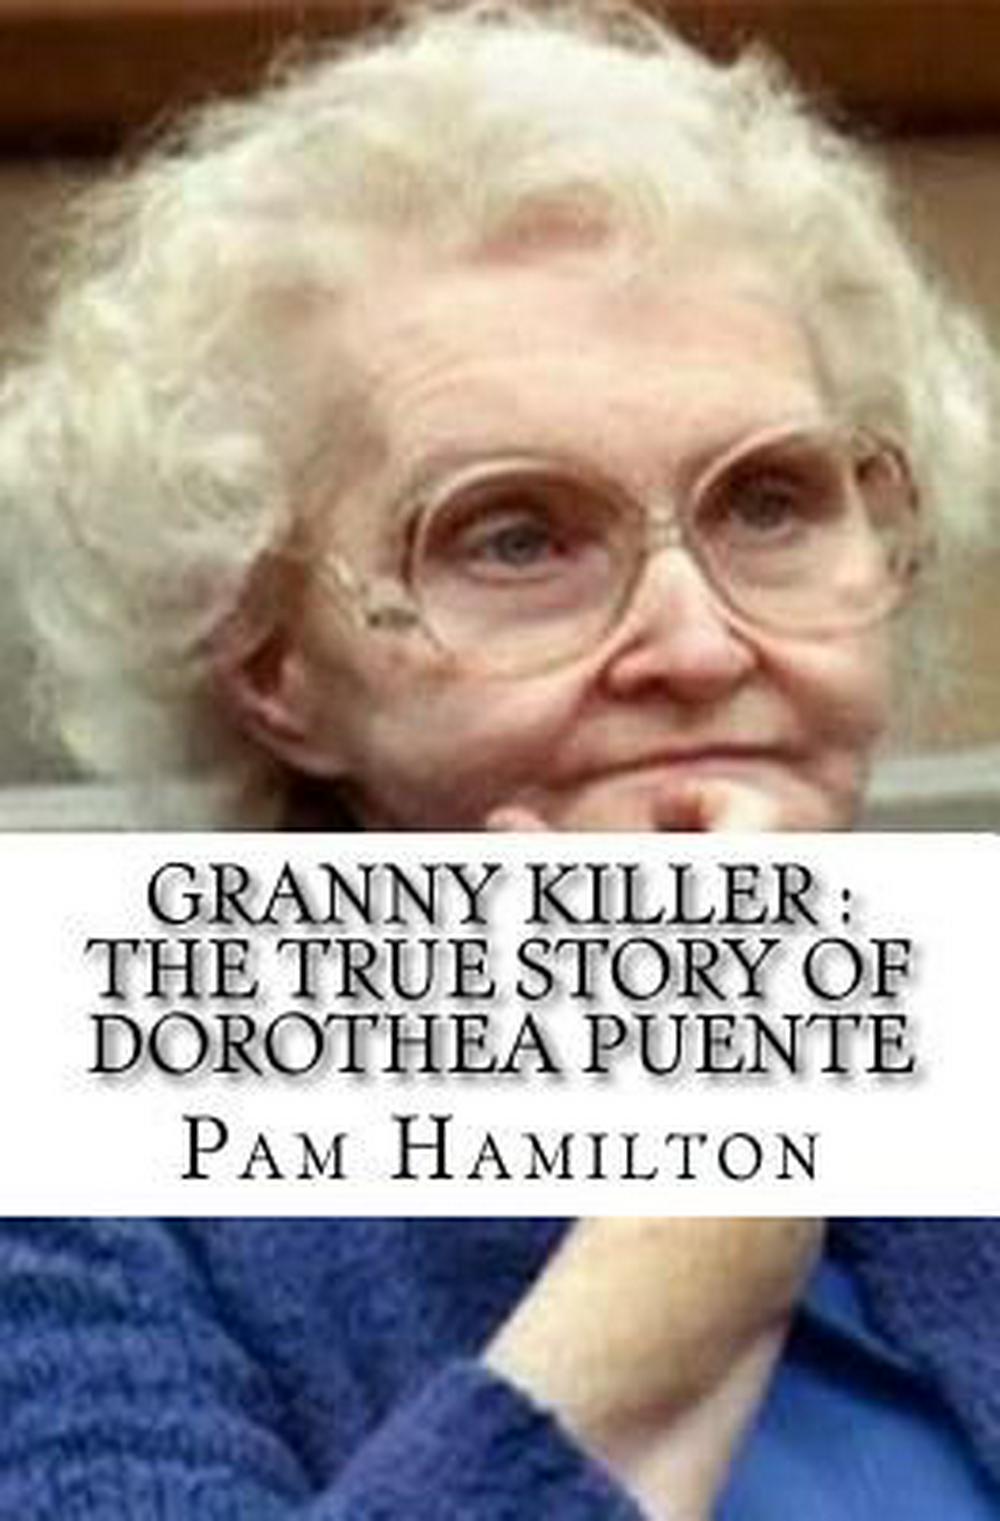 Granny Killer- The True Story of Dorothea Puente by Pam Hamilton